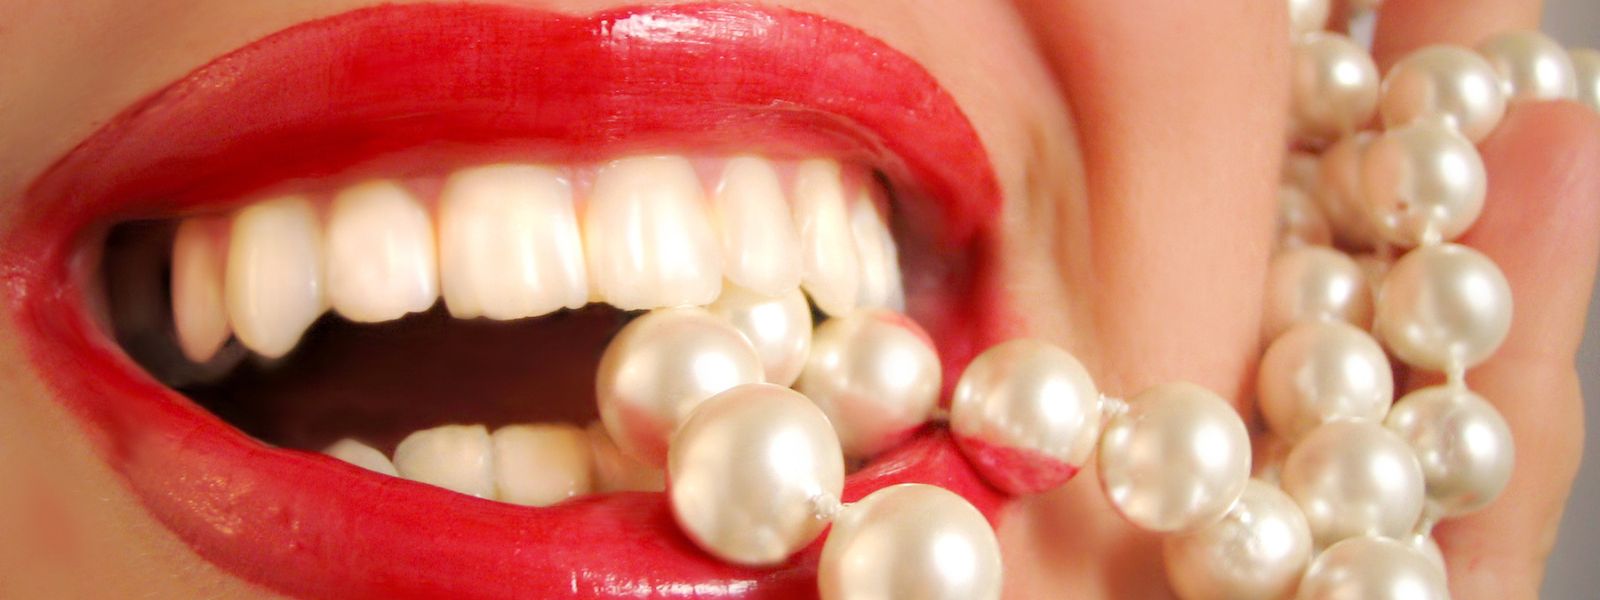 girl biting pearls